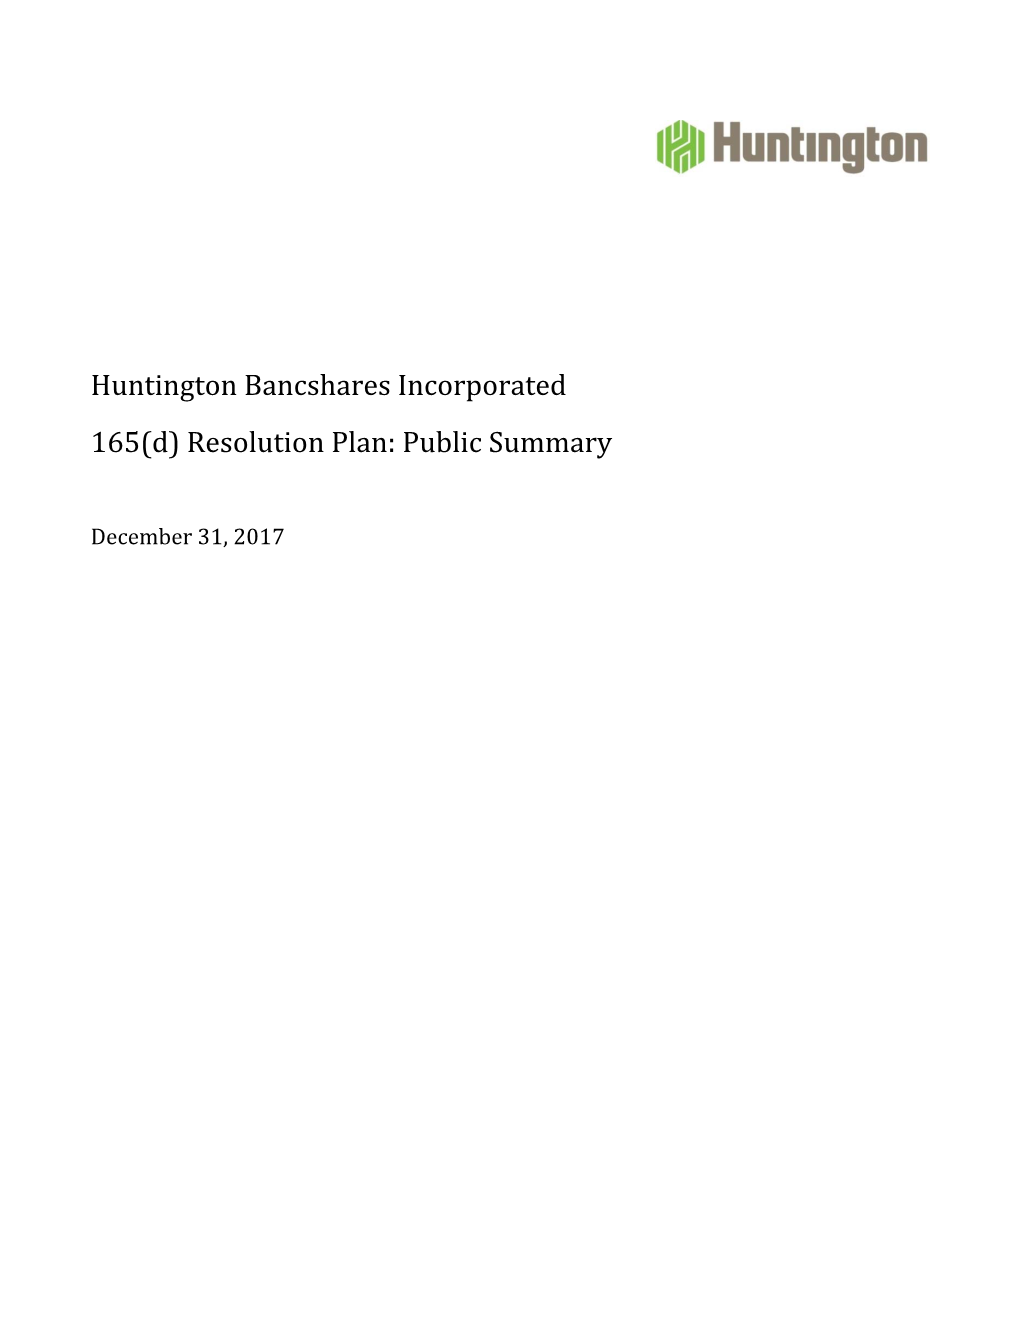 Huntington Bancshares Incorporated 165(D) Resolution Plan: Public Summary